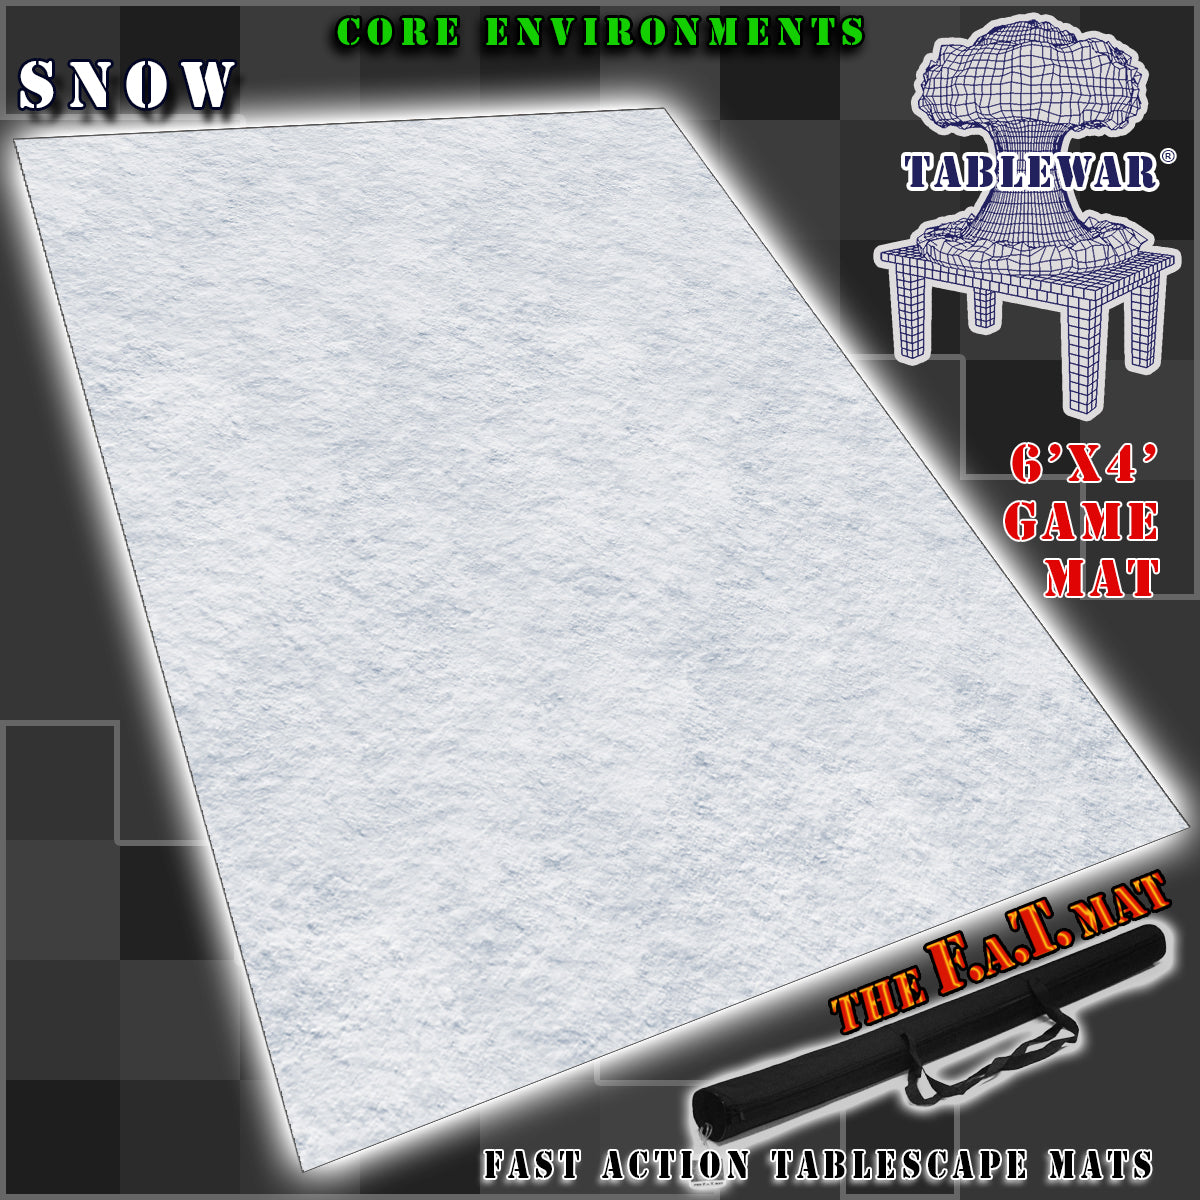 6x4 'Snow' F.A.T. Mat Gaming Mat – TABLEWAR®